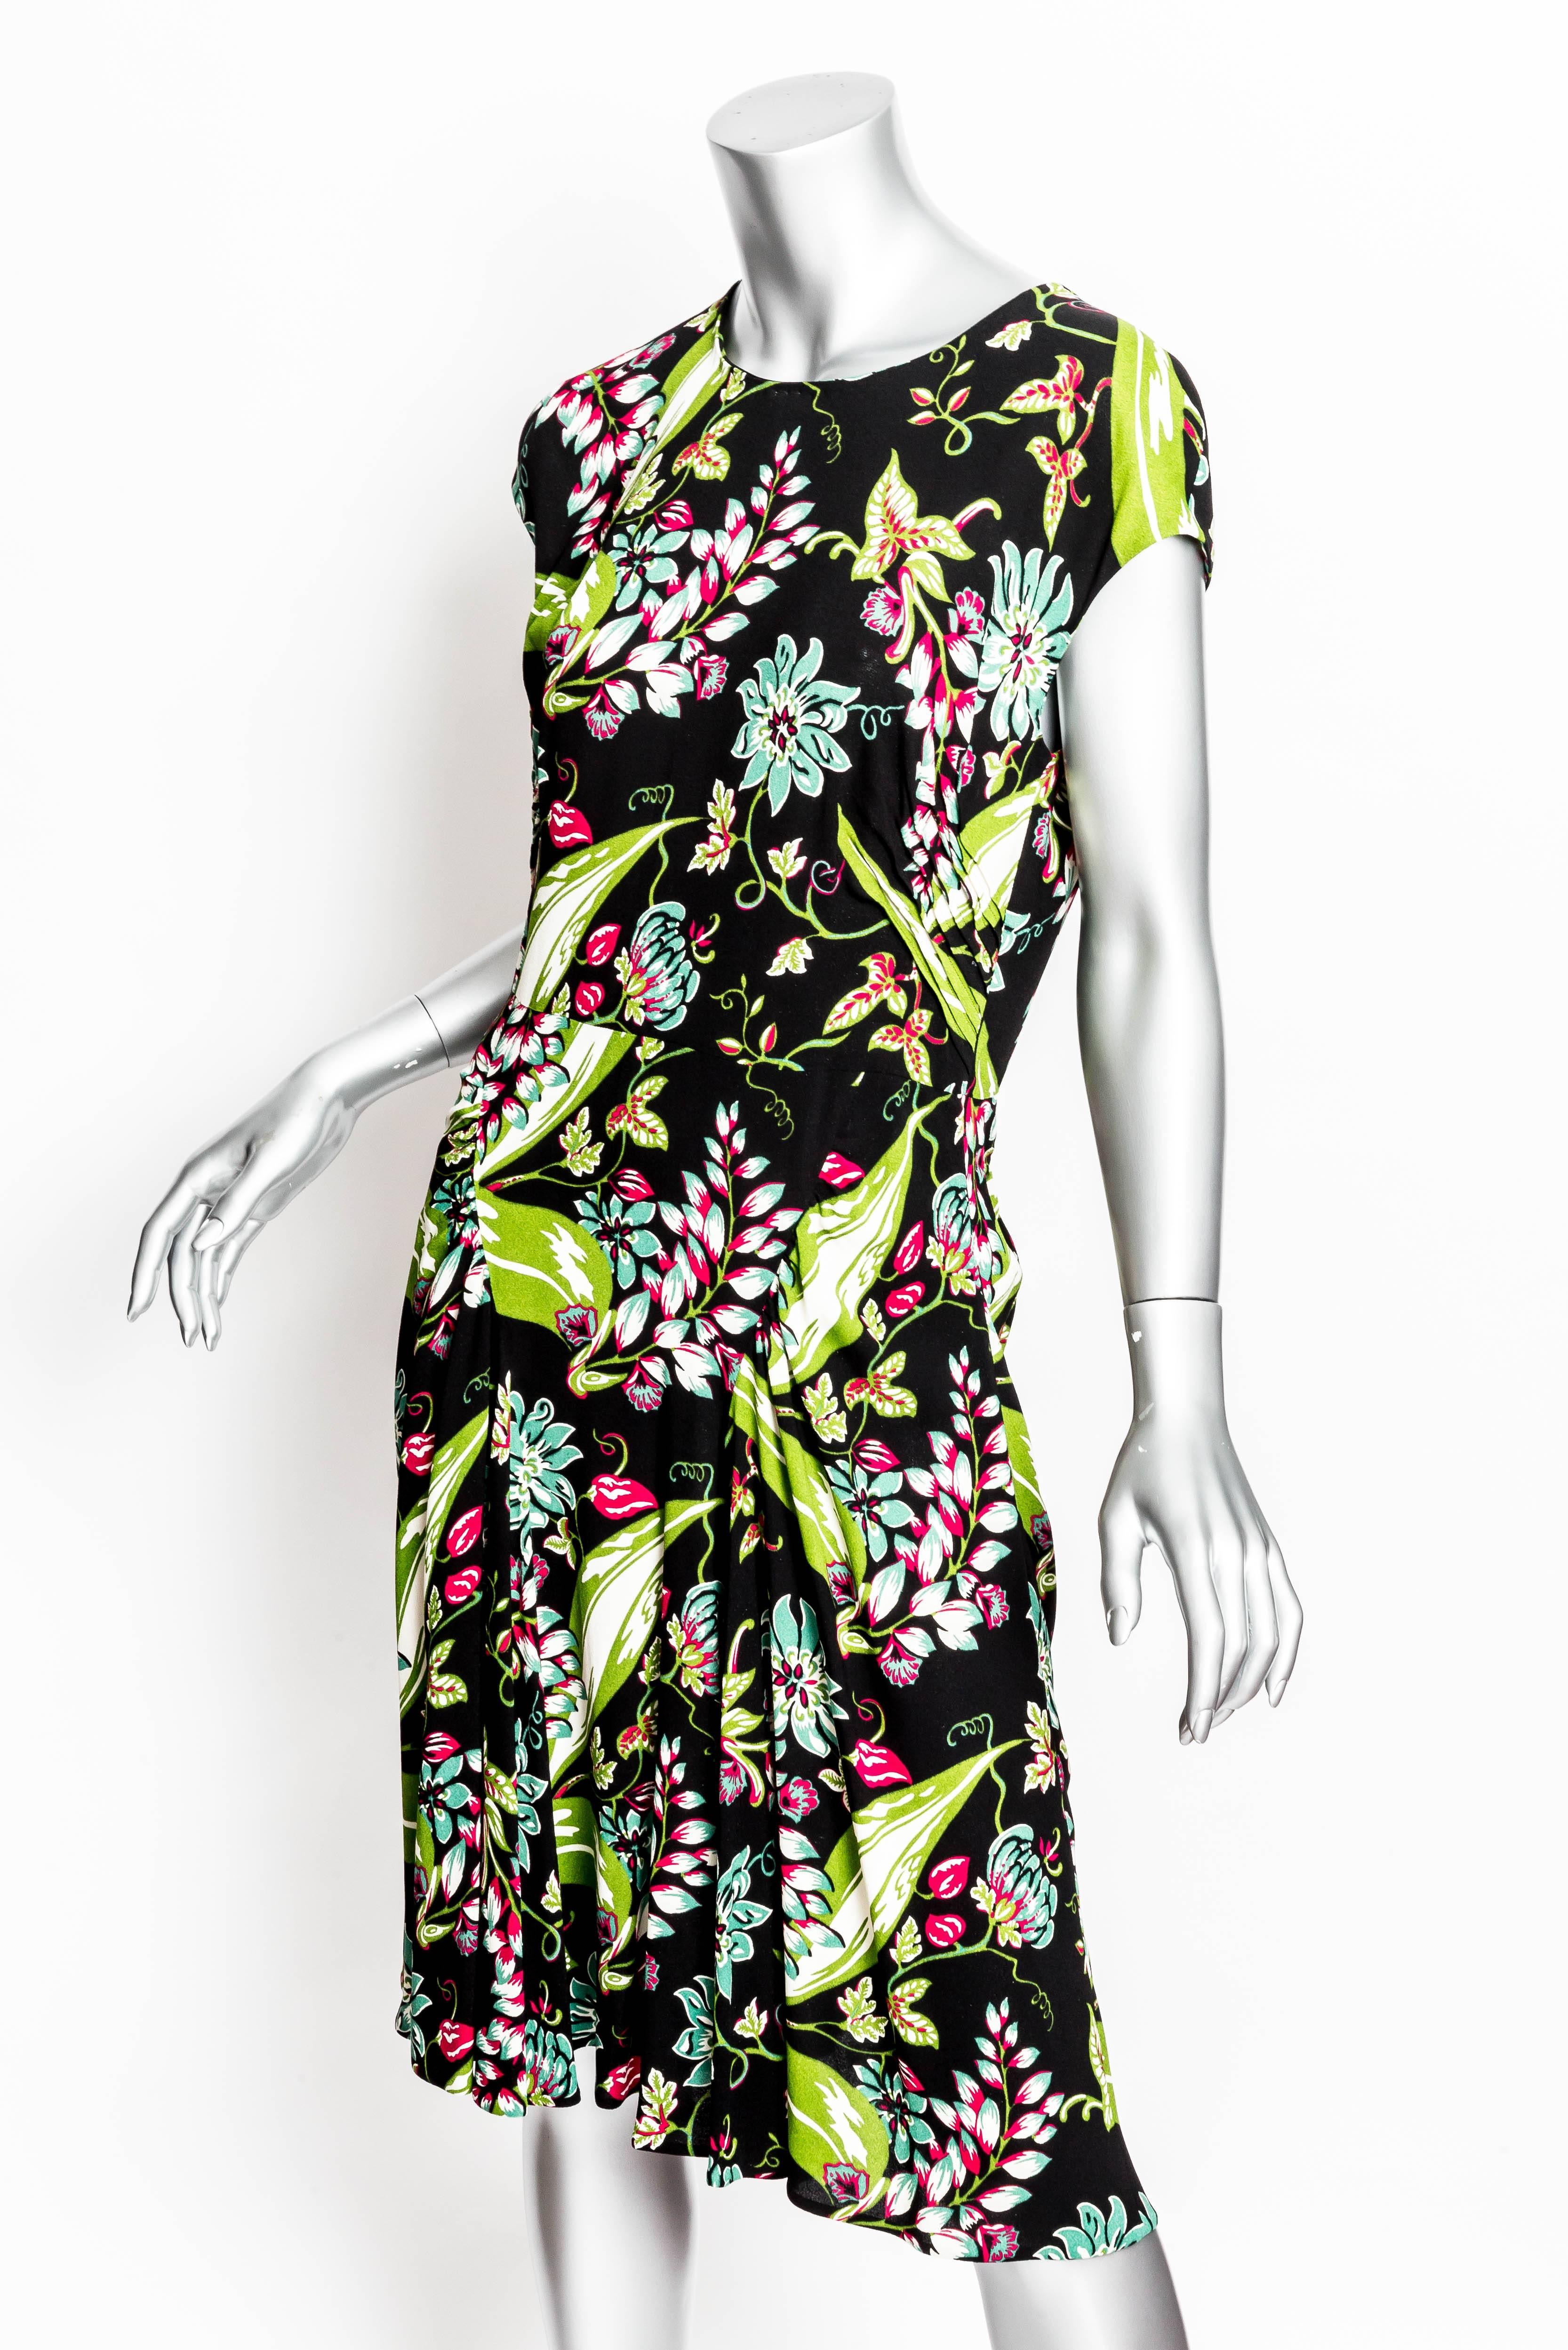 Women's or Men's Prada Green and Black Floral Print Dress - Size 44